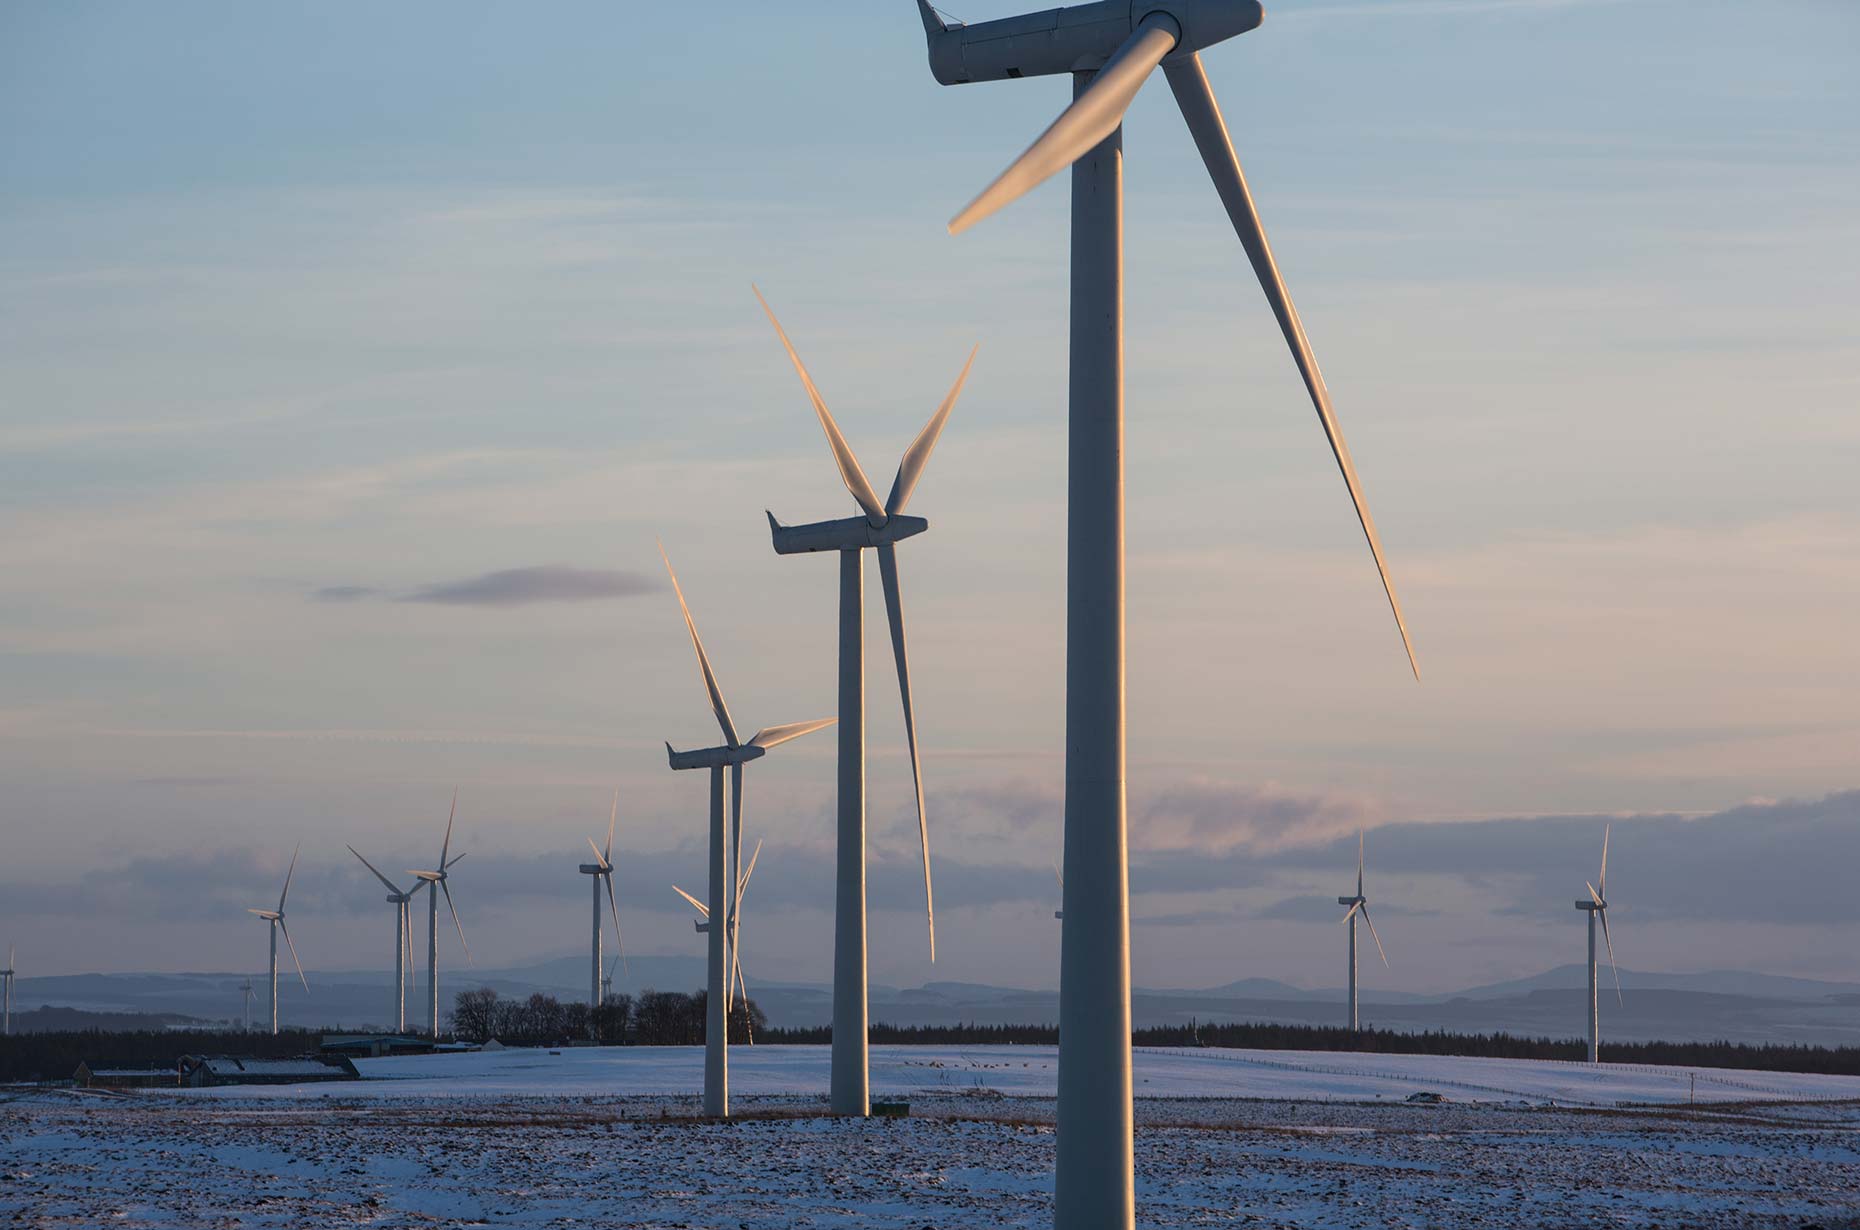 Wind turbines at Whitelee wind farm, by Scotland Greenpeace photographer